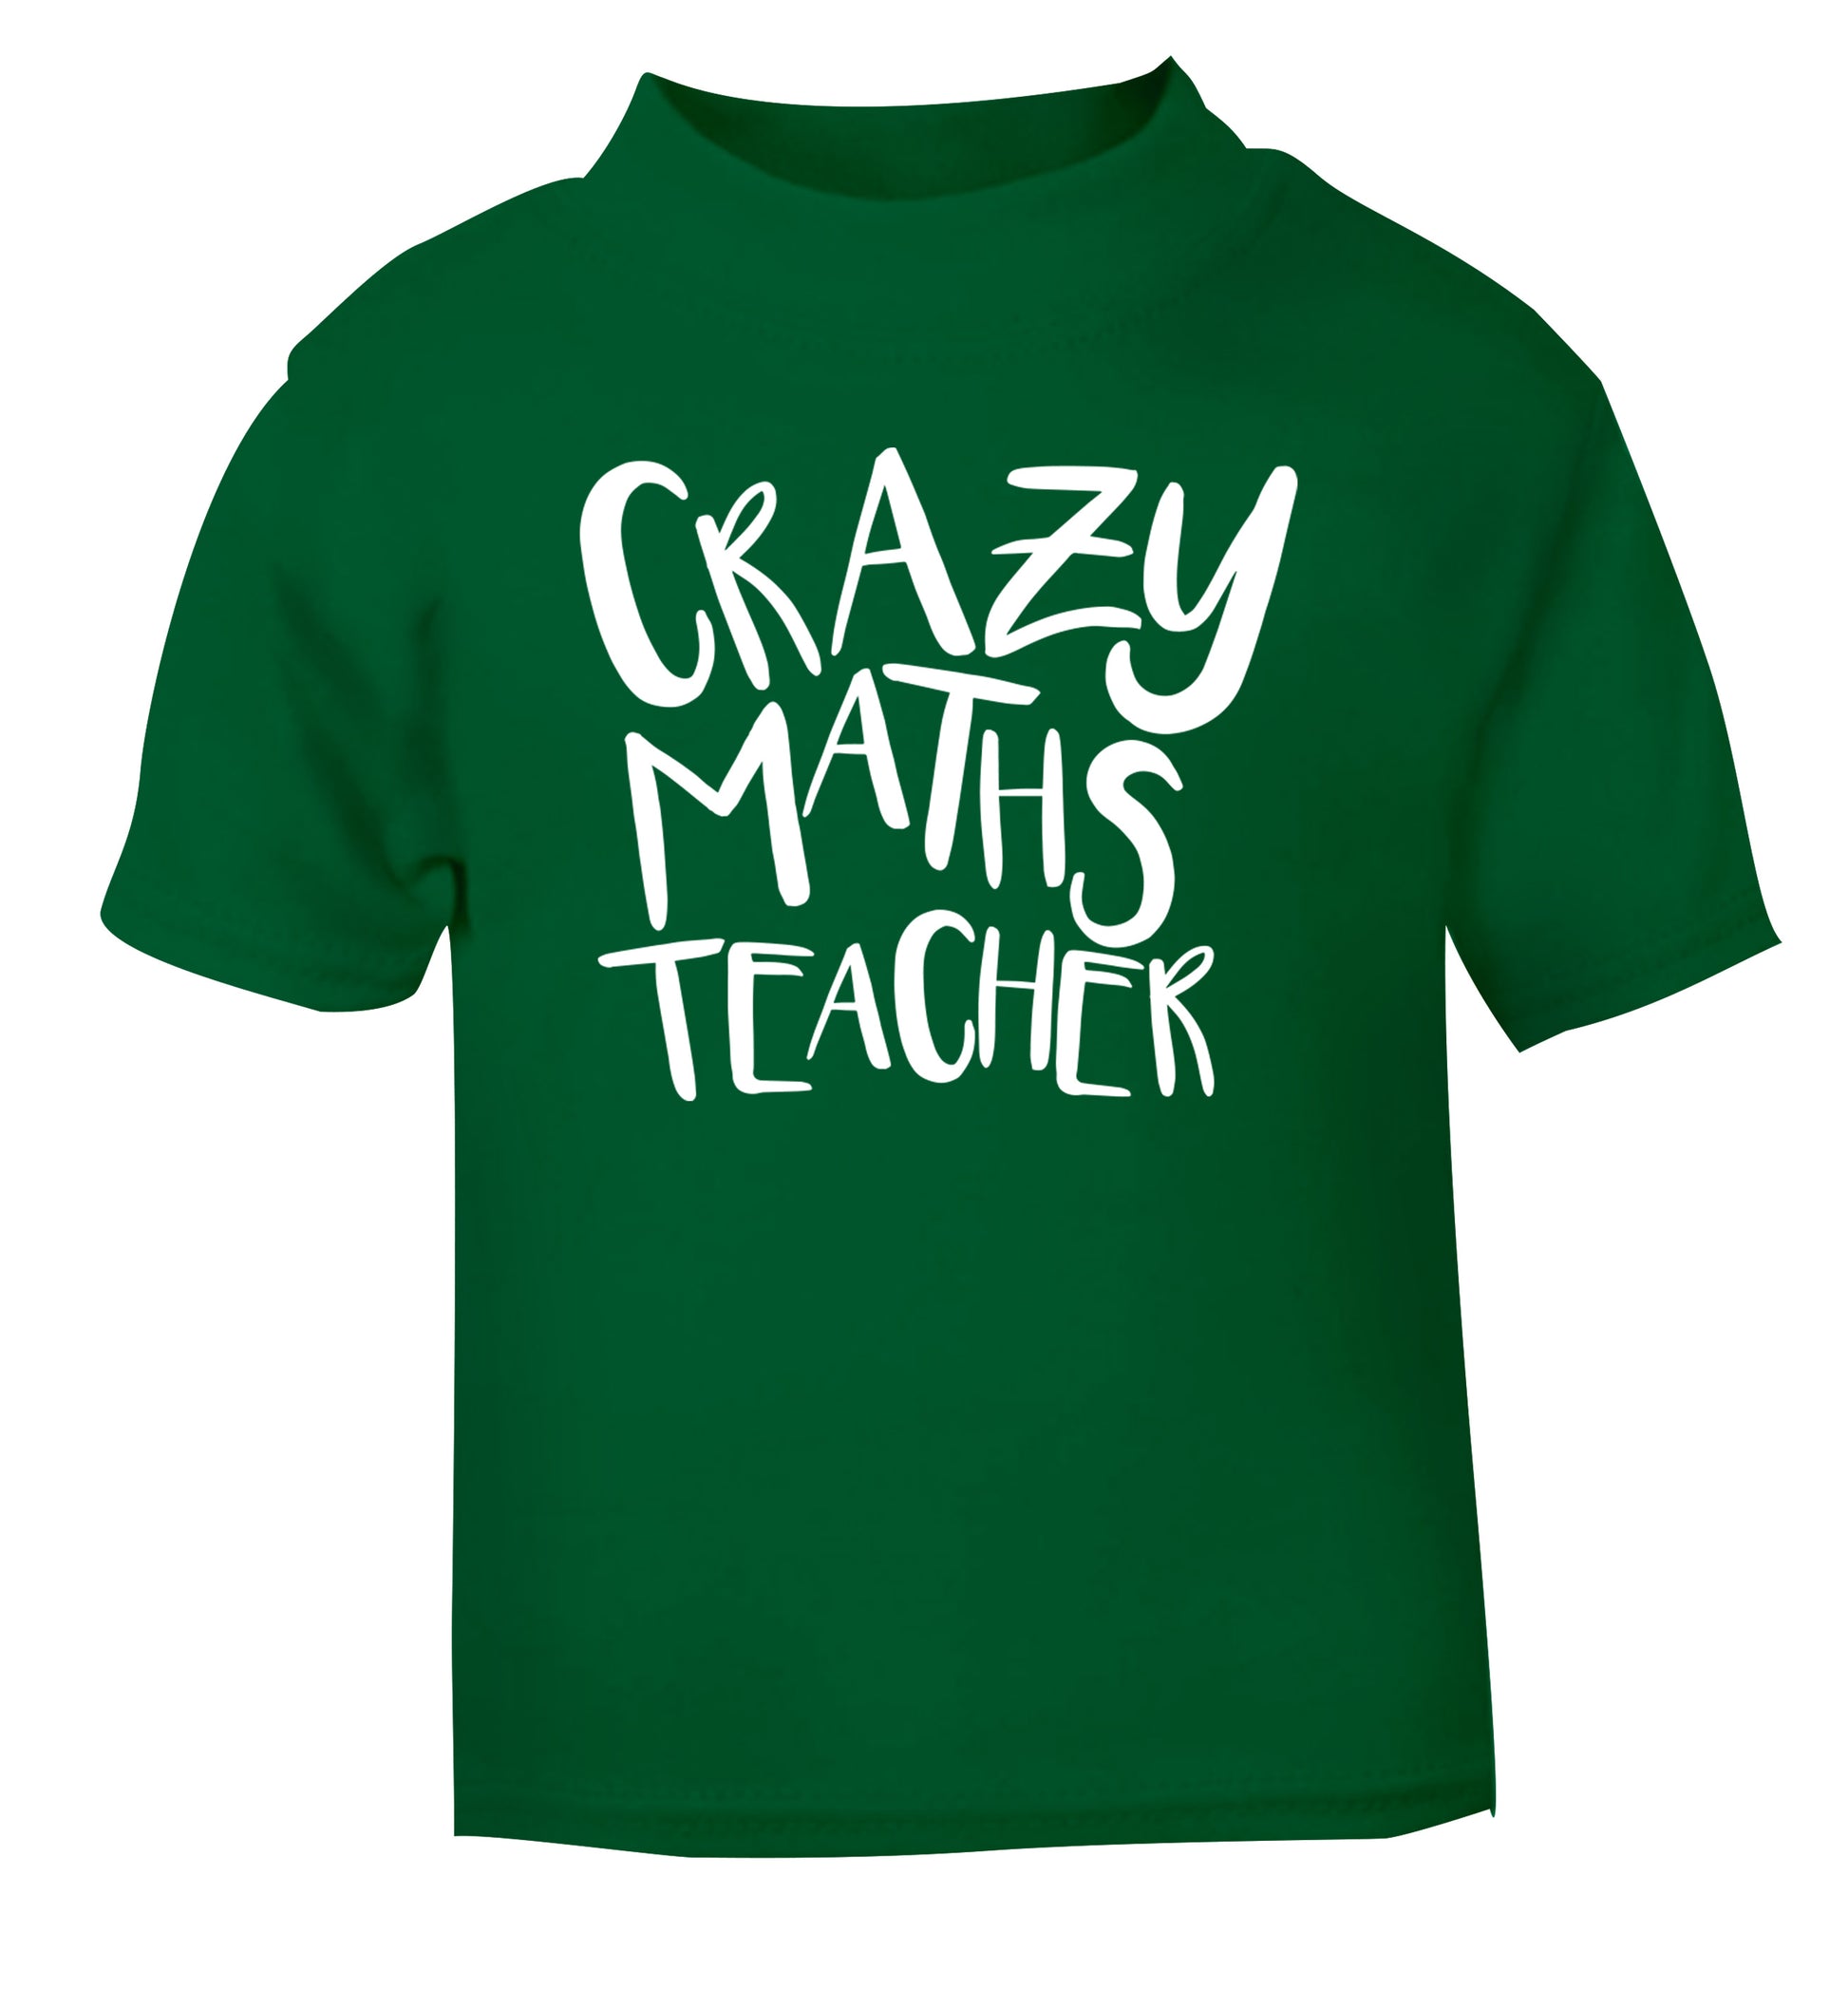 Crazy maths teacher green Baby Toddler Tshirt 2 Years